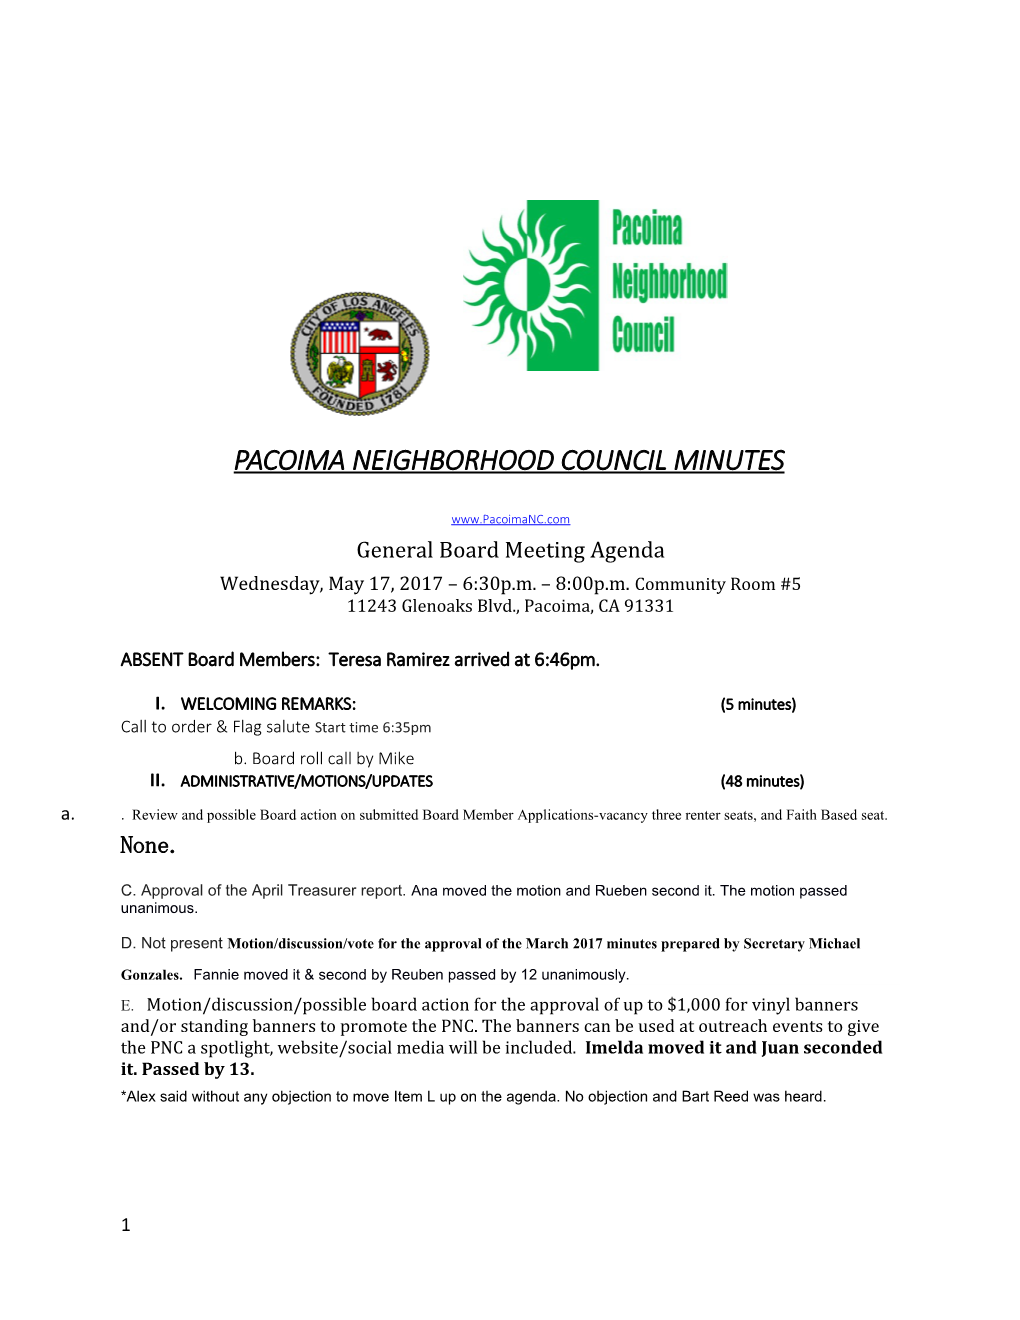 Pacoima Neighborhood Council Minutes